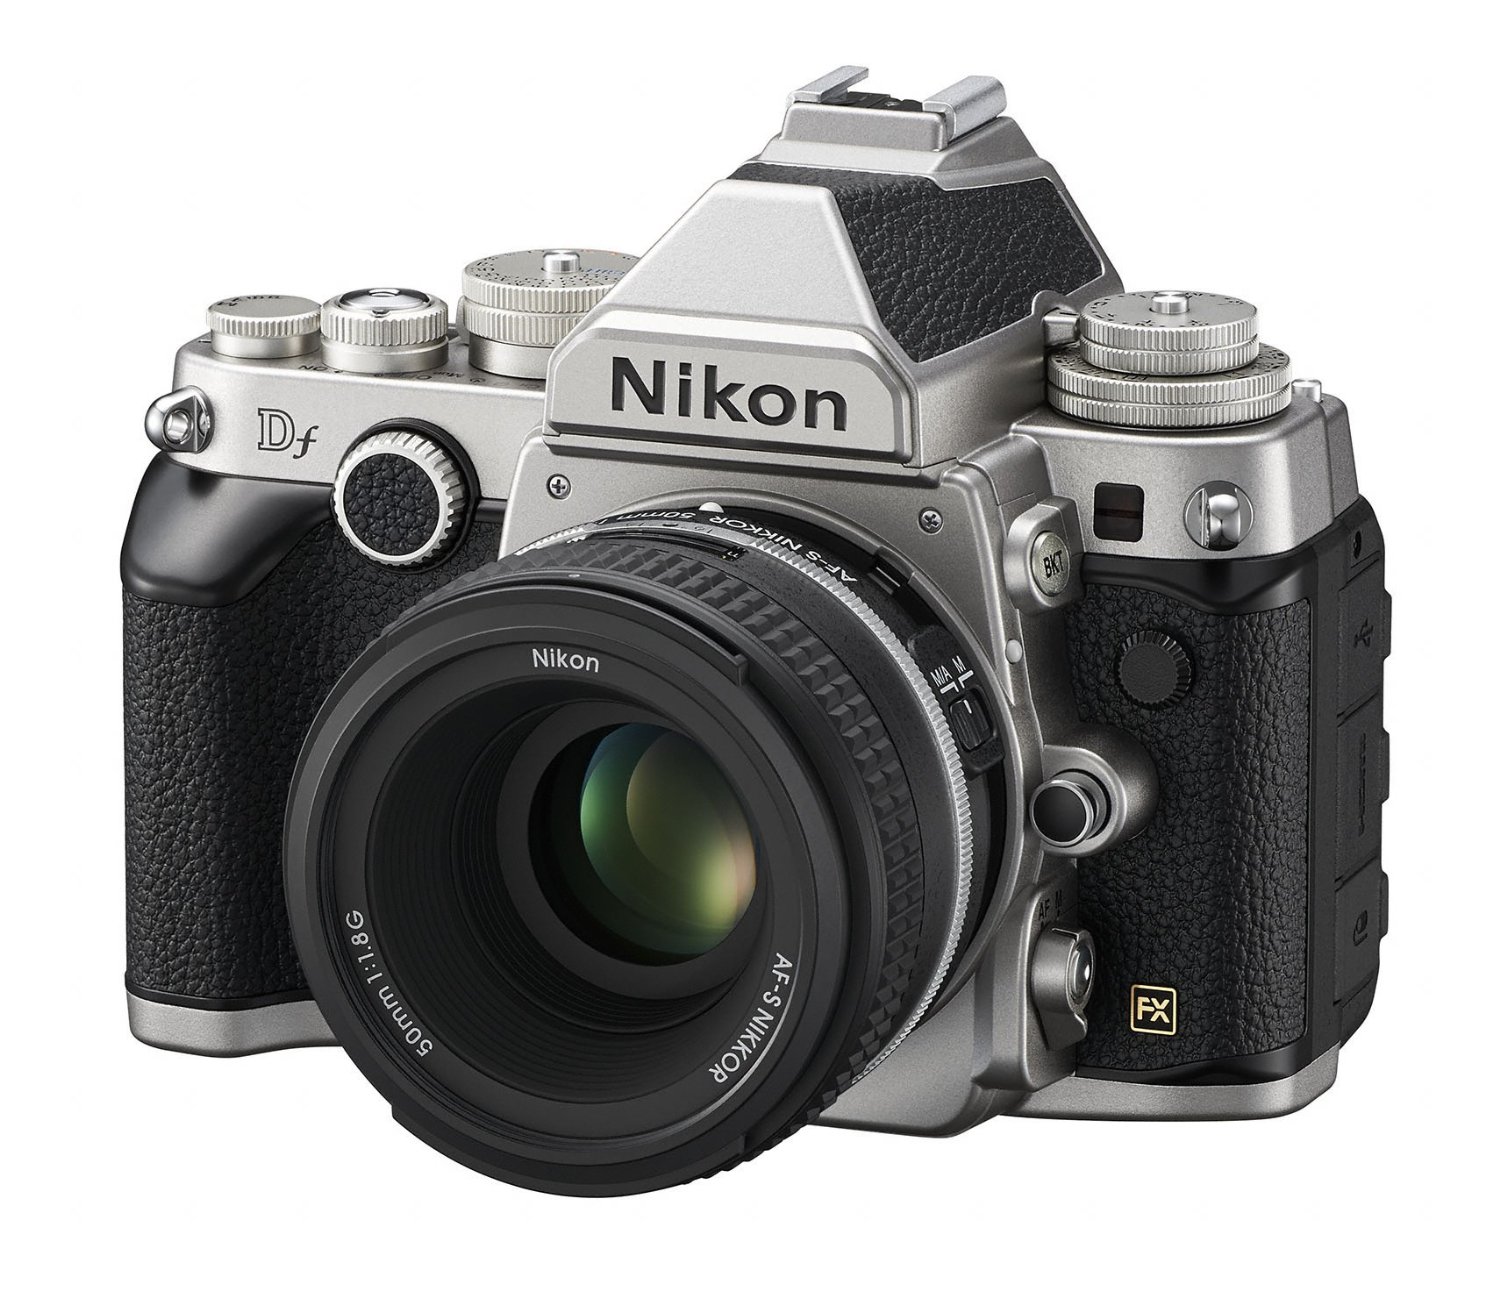 Nikon 1528 Df 16.2 MP CMOS review